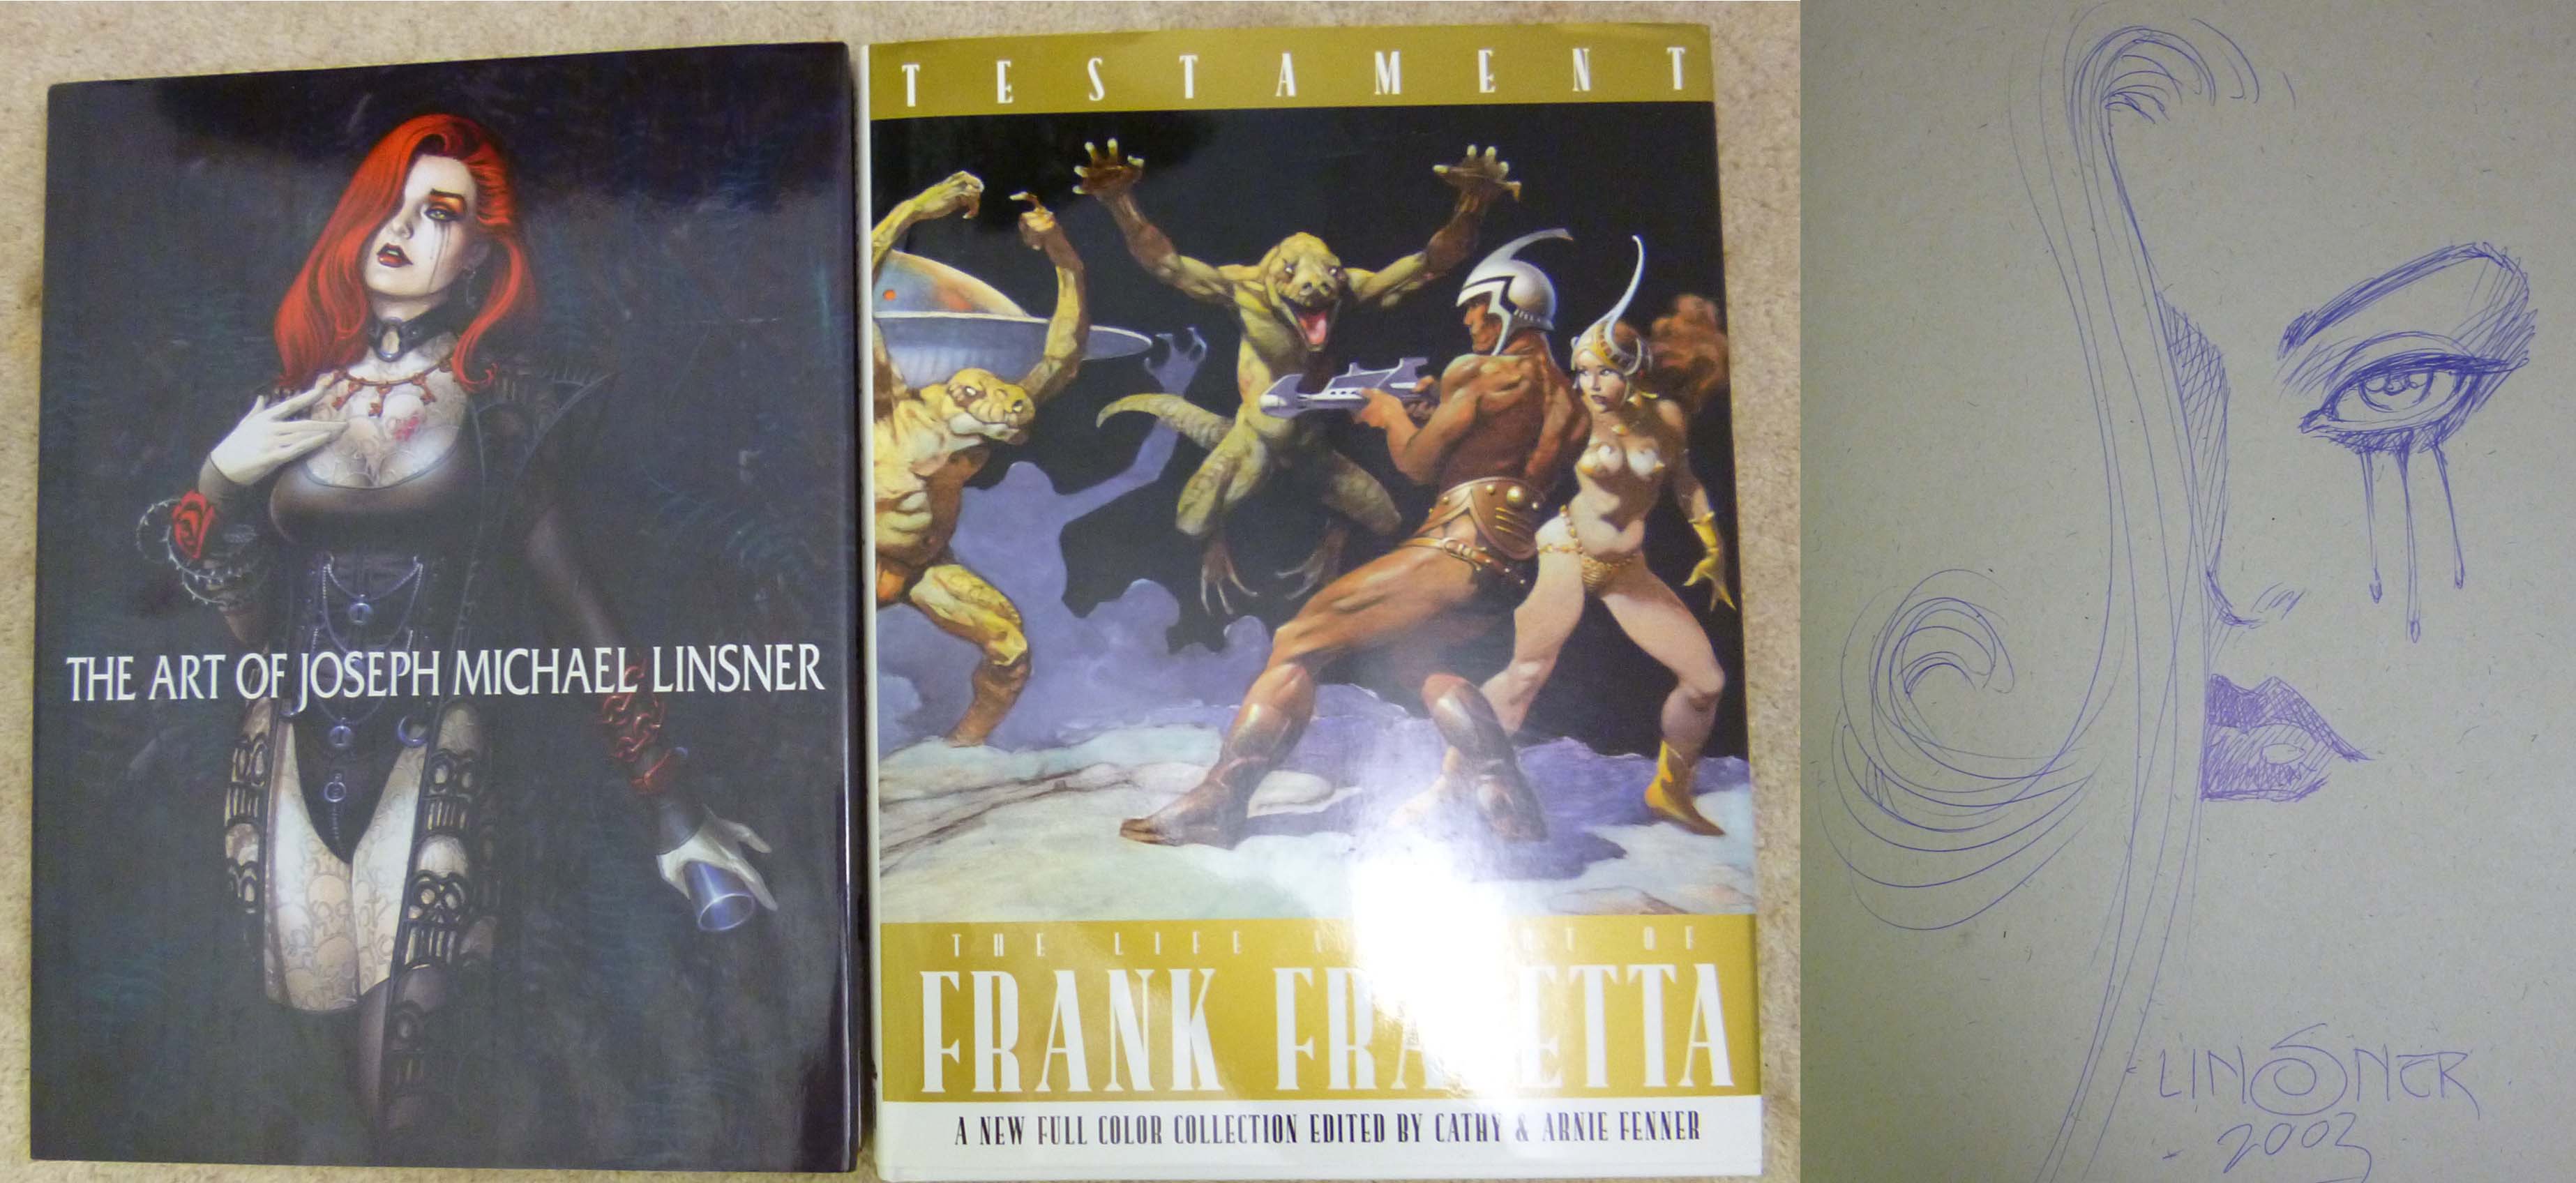 Frazetta (Frank) - Testament, A Celebration Of The Life And Art Of Frank Frazetta, published by